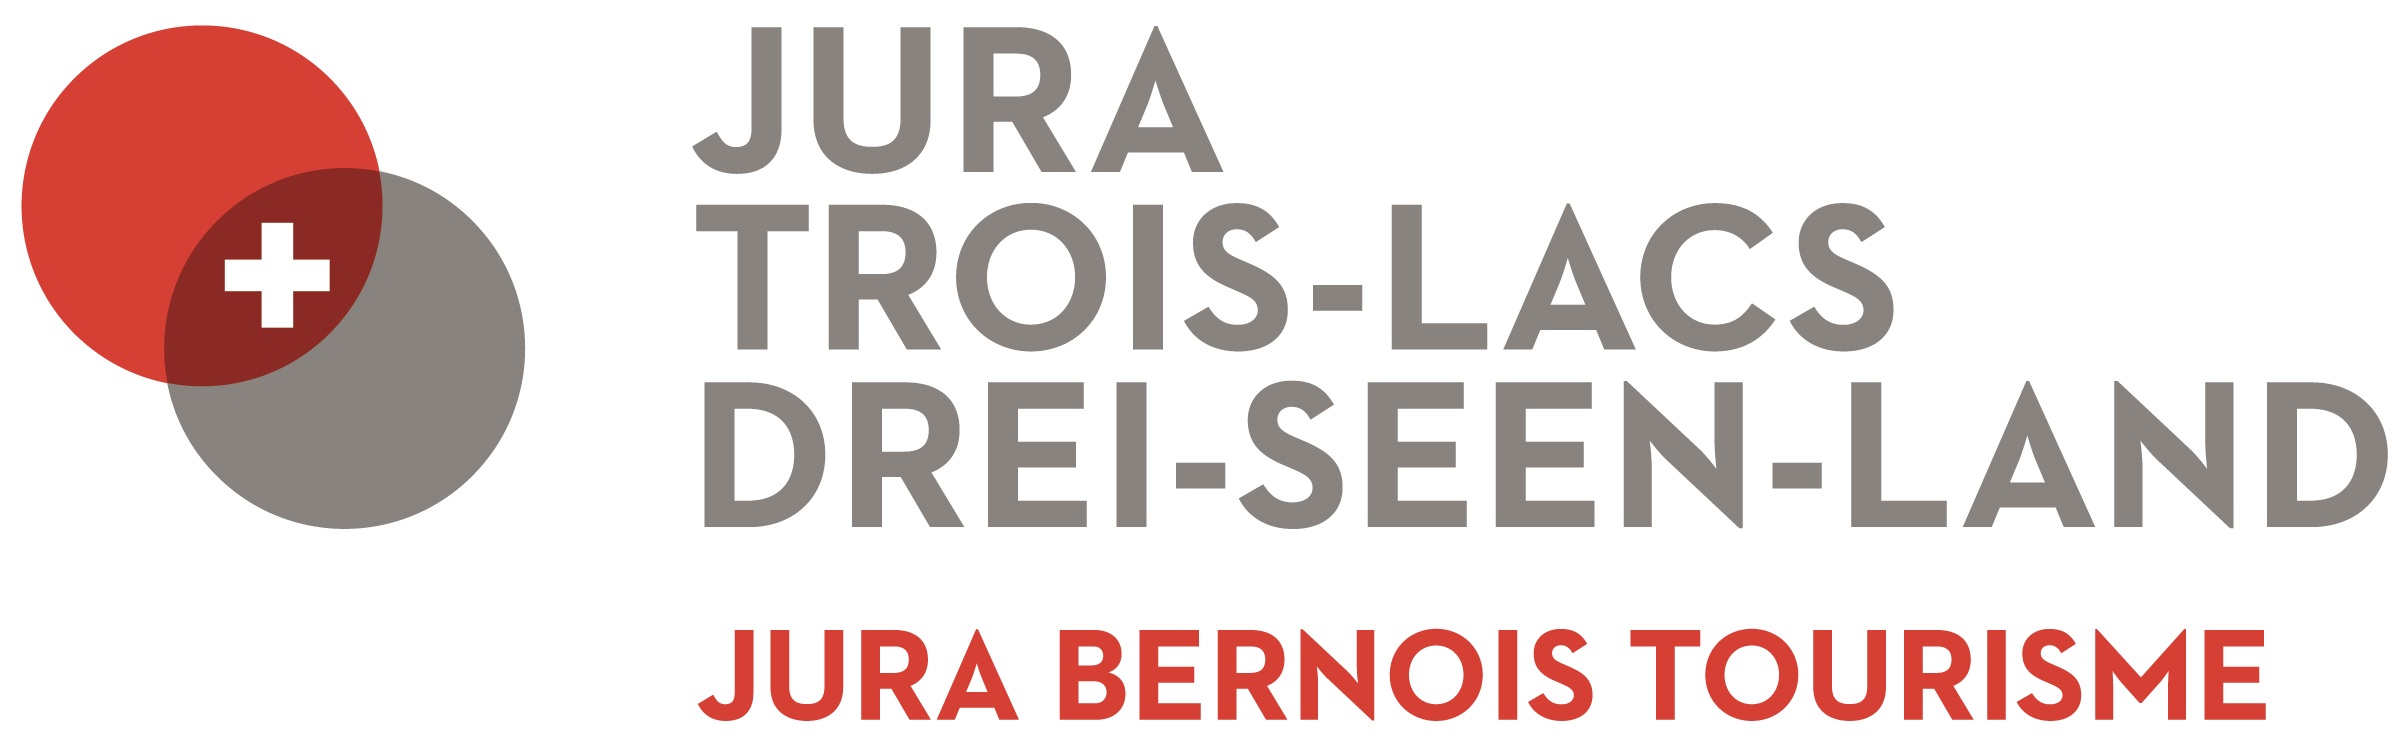 Jura Bernois tourisme